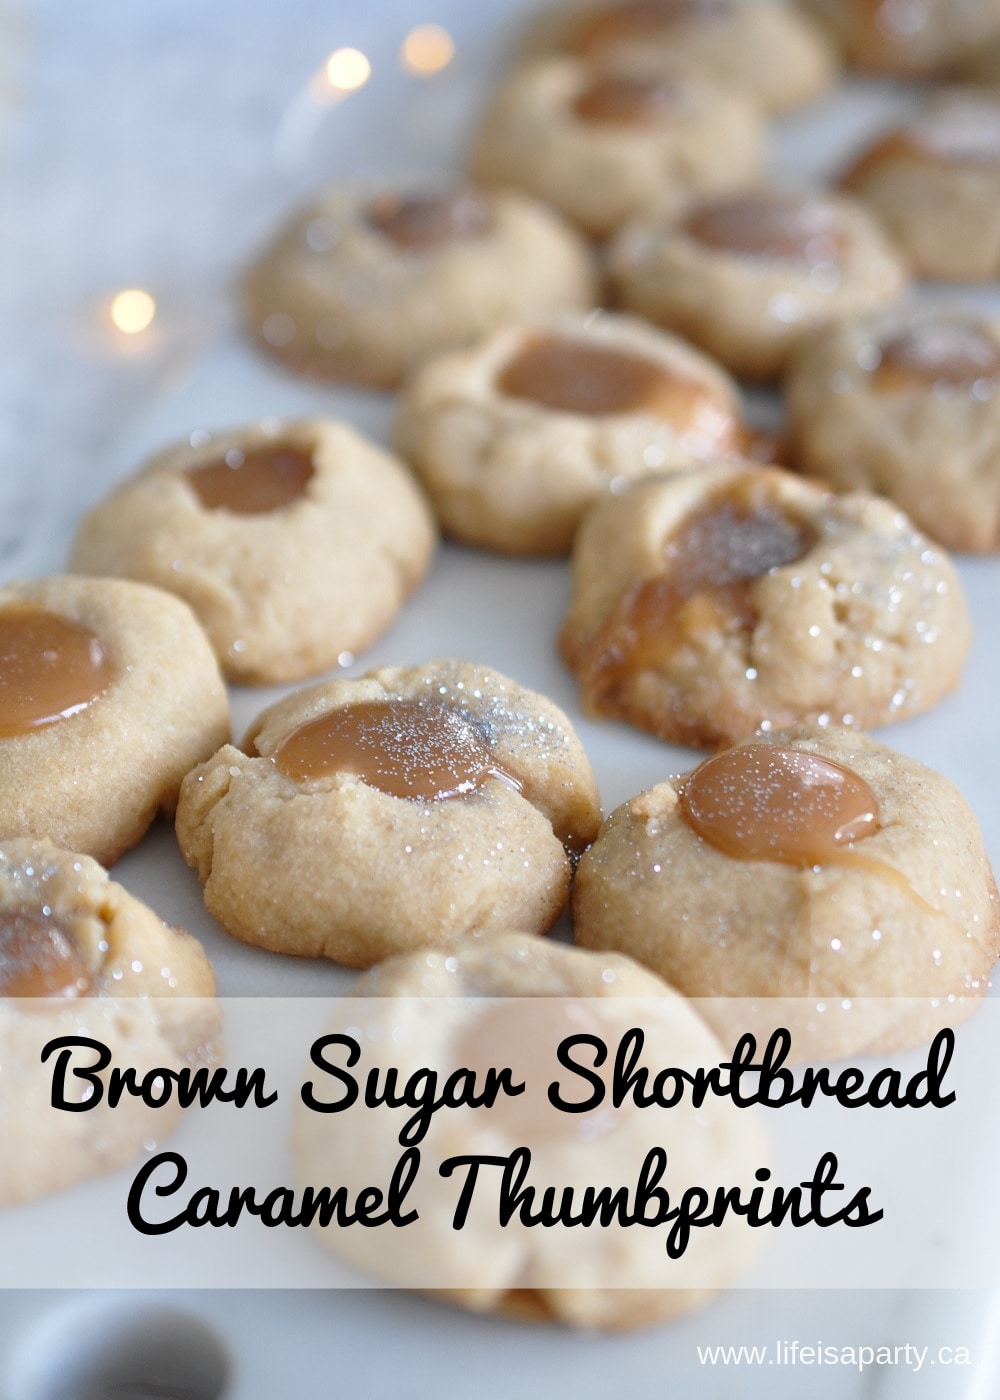 Brown Sugar Shortbread Caramel Thumbprint Cookies: The brown sugar makes the shortbread rich and the oozy, gooey caramel centres are perfect.